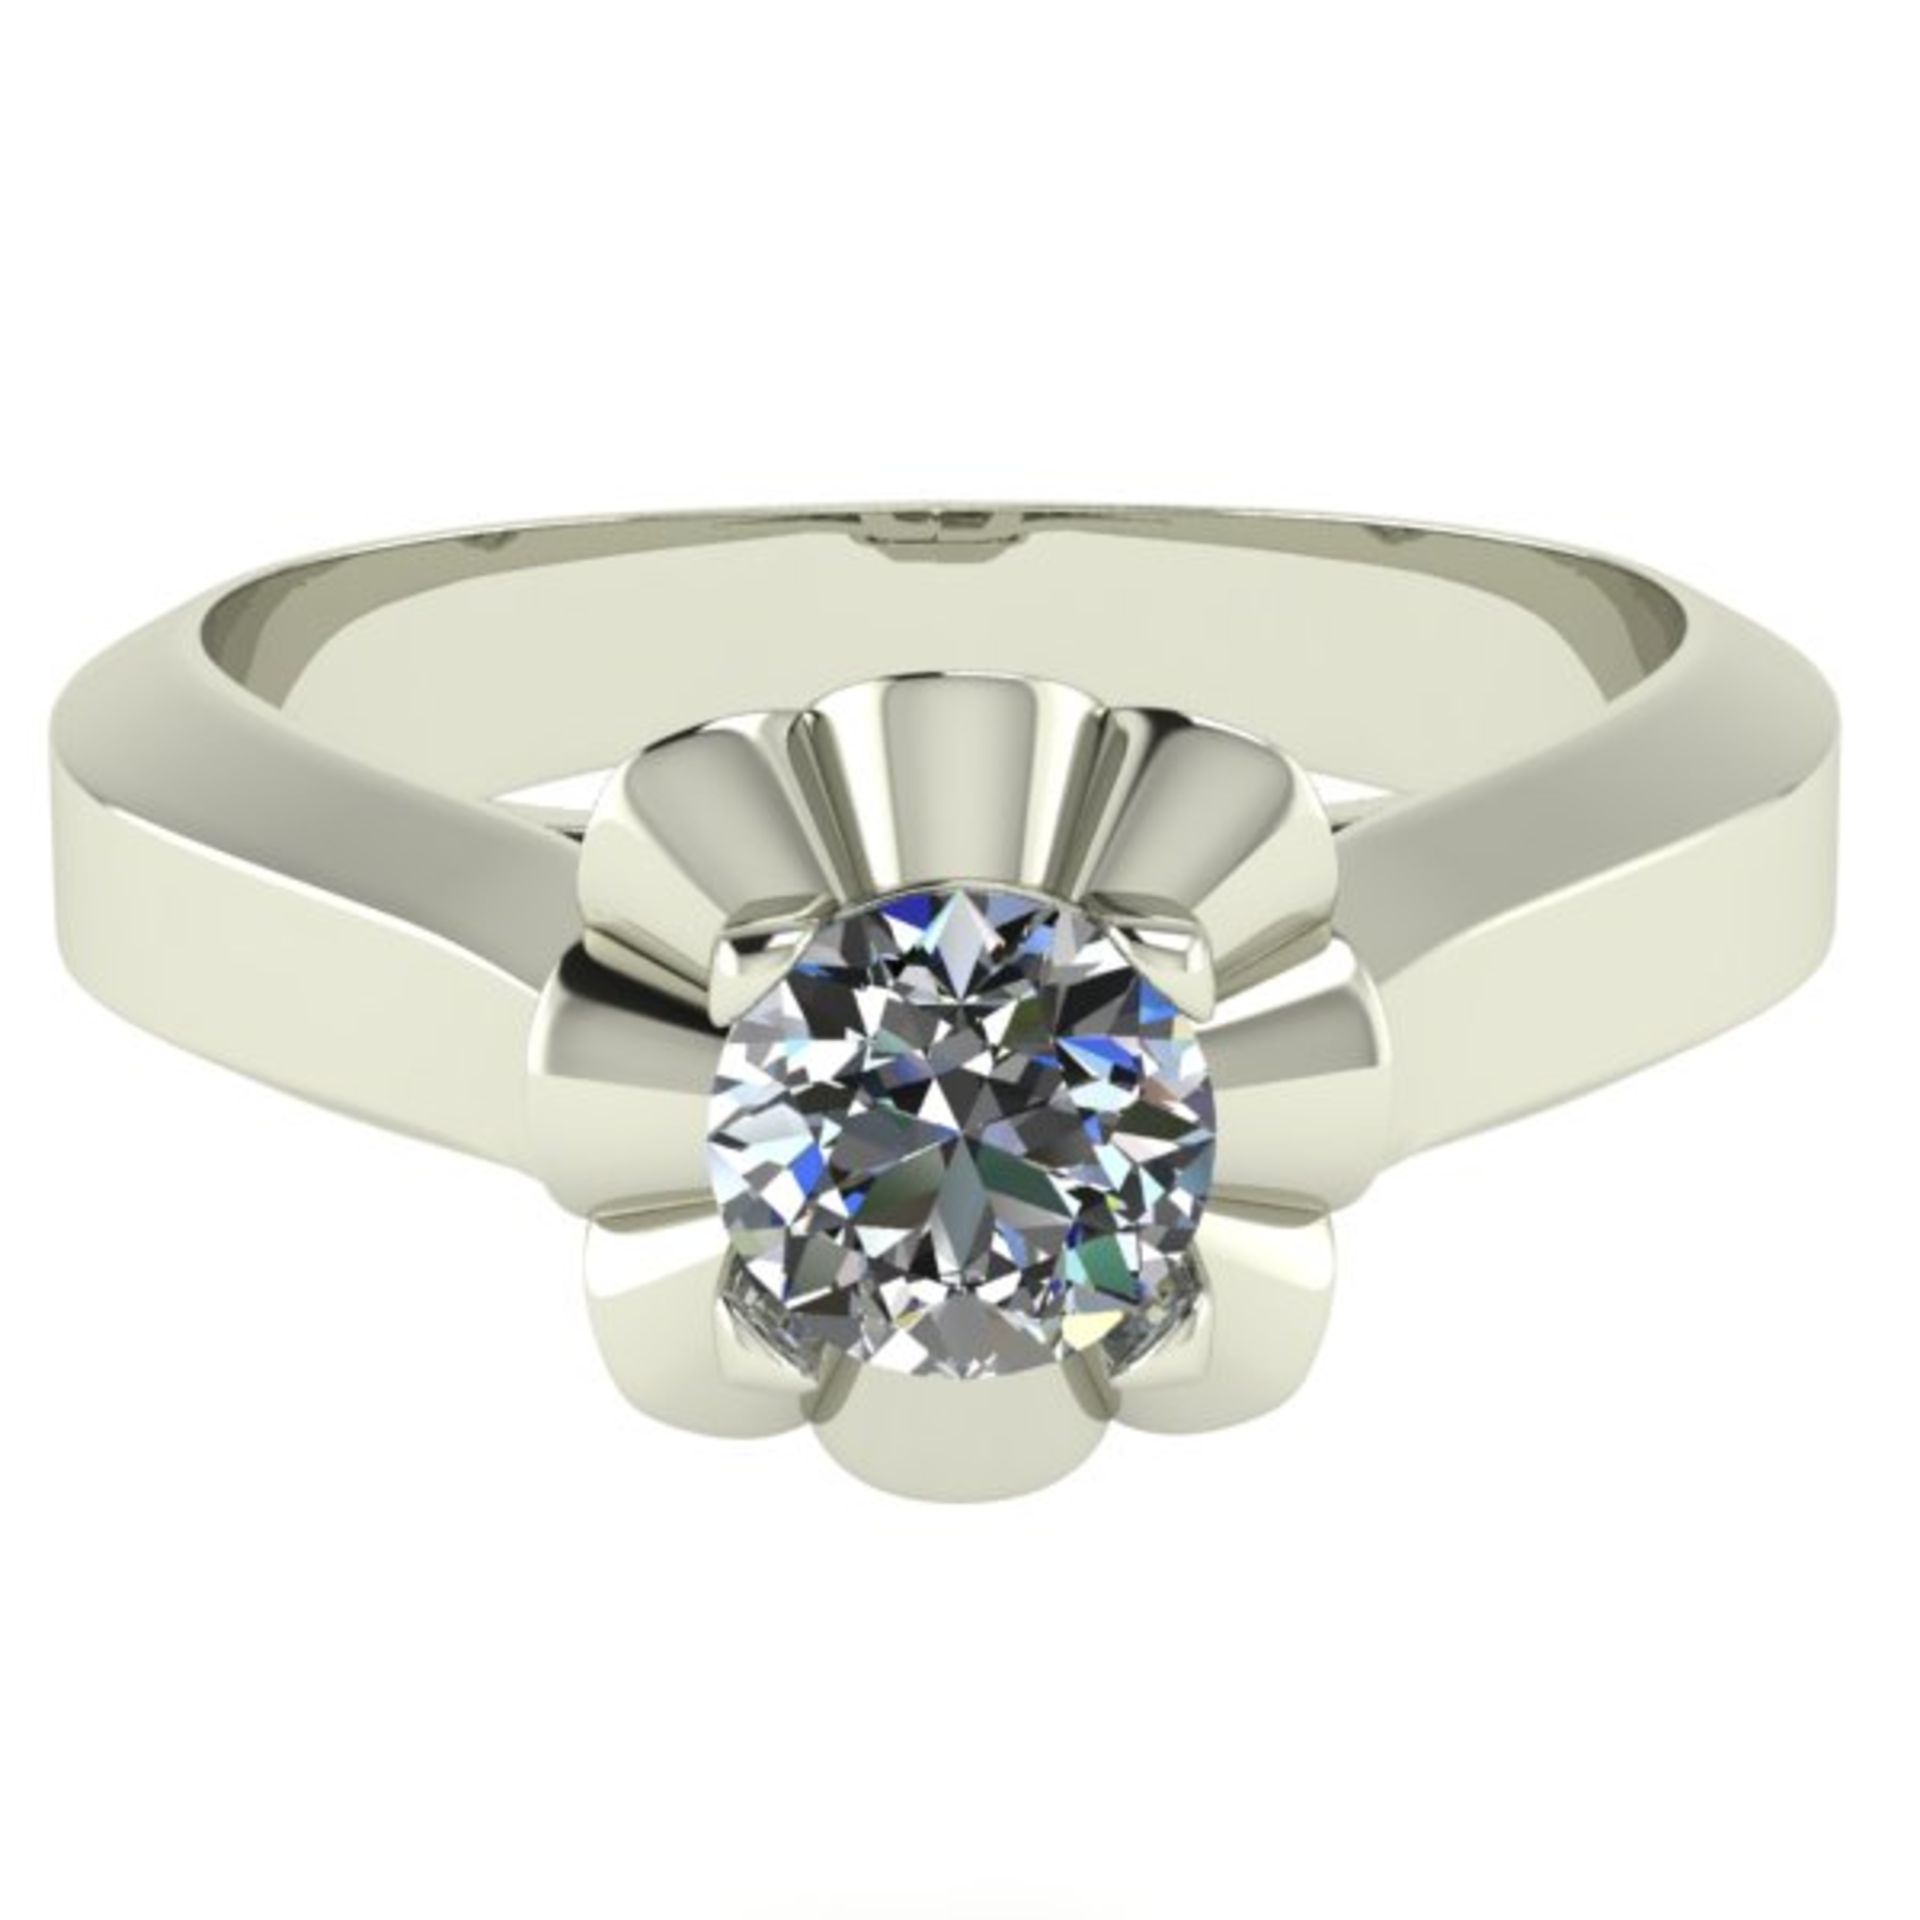 14 K / 585 White Gold Diamond Ring - Image 4 of 4